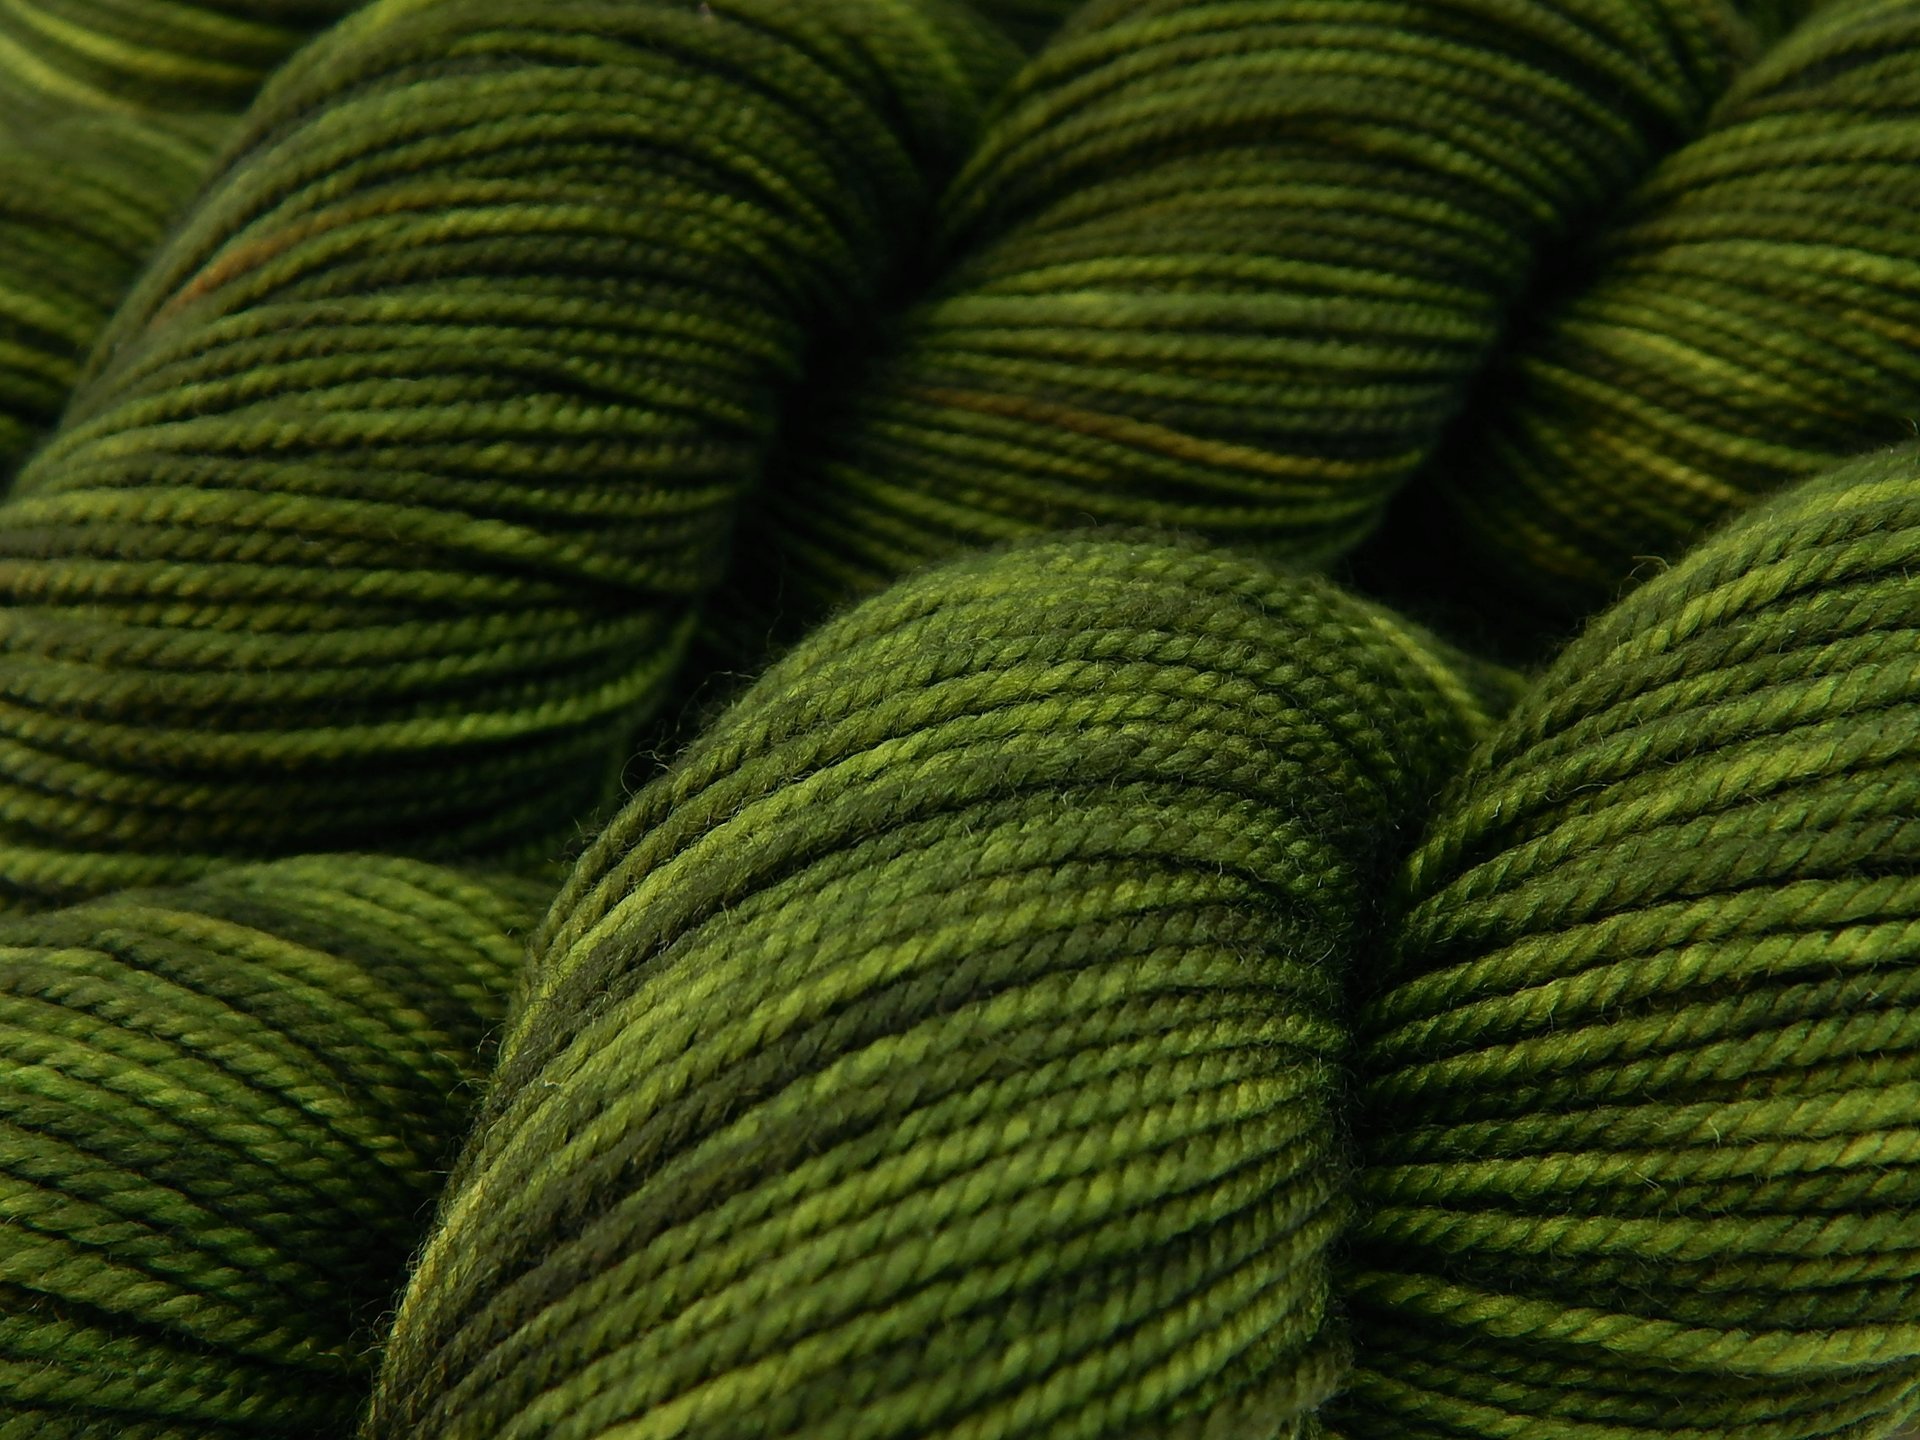 Hand Dyed Yarn, Sport Weight Superwash Merino Wool - Moss Tonal - Olive Green Indie Dyer Knitting Yarn, Semi Solid Kettle Dyed Sock Yarn